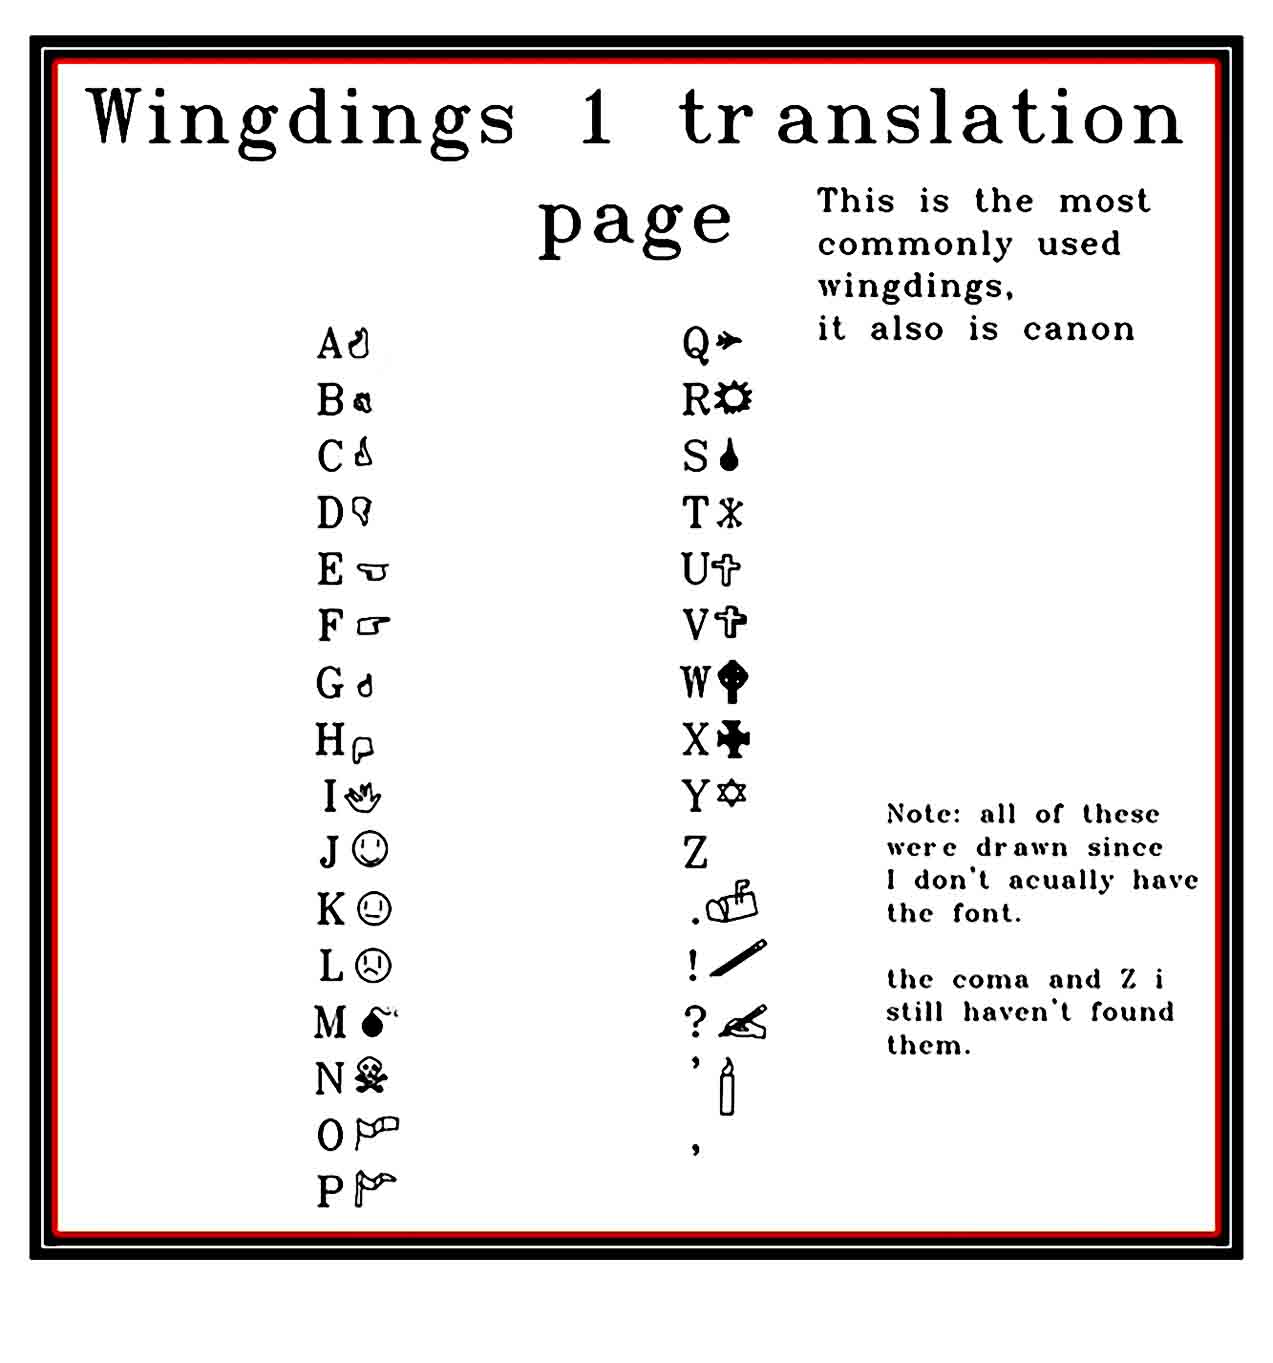 wingdings translator template 10